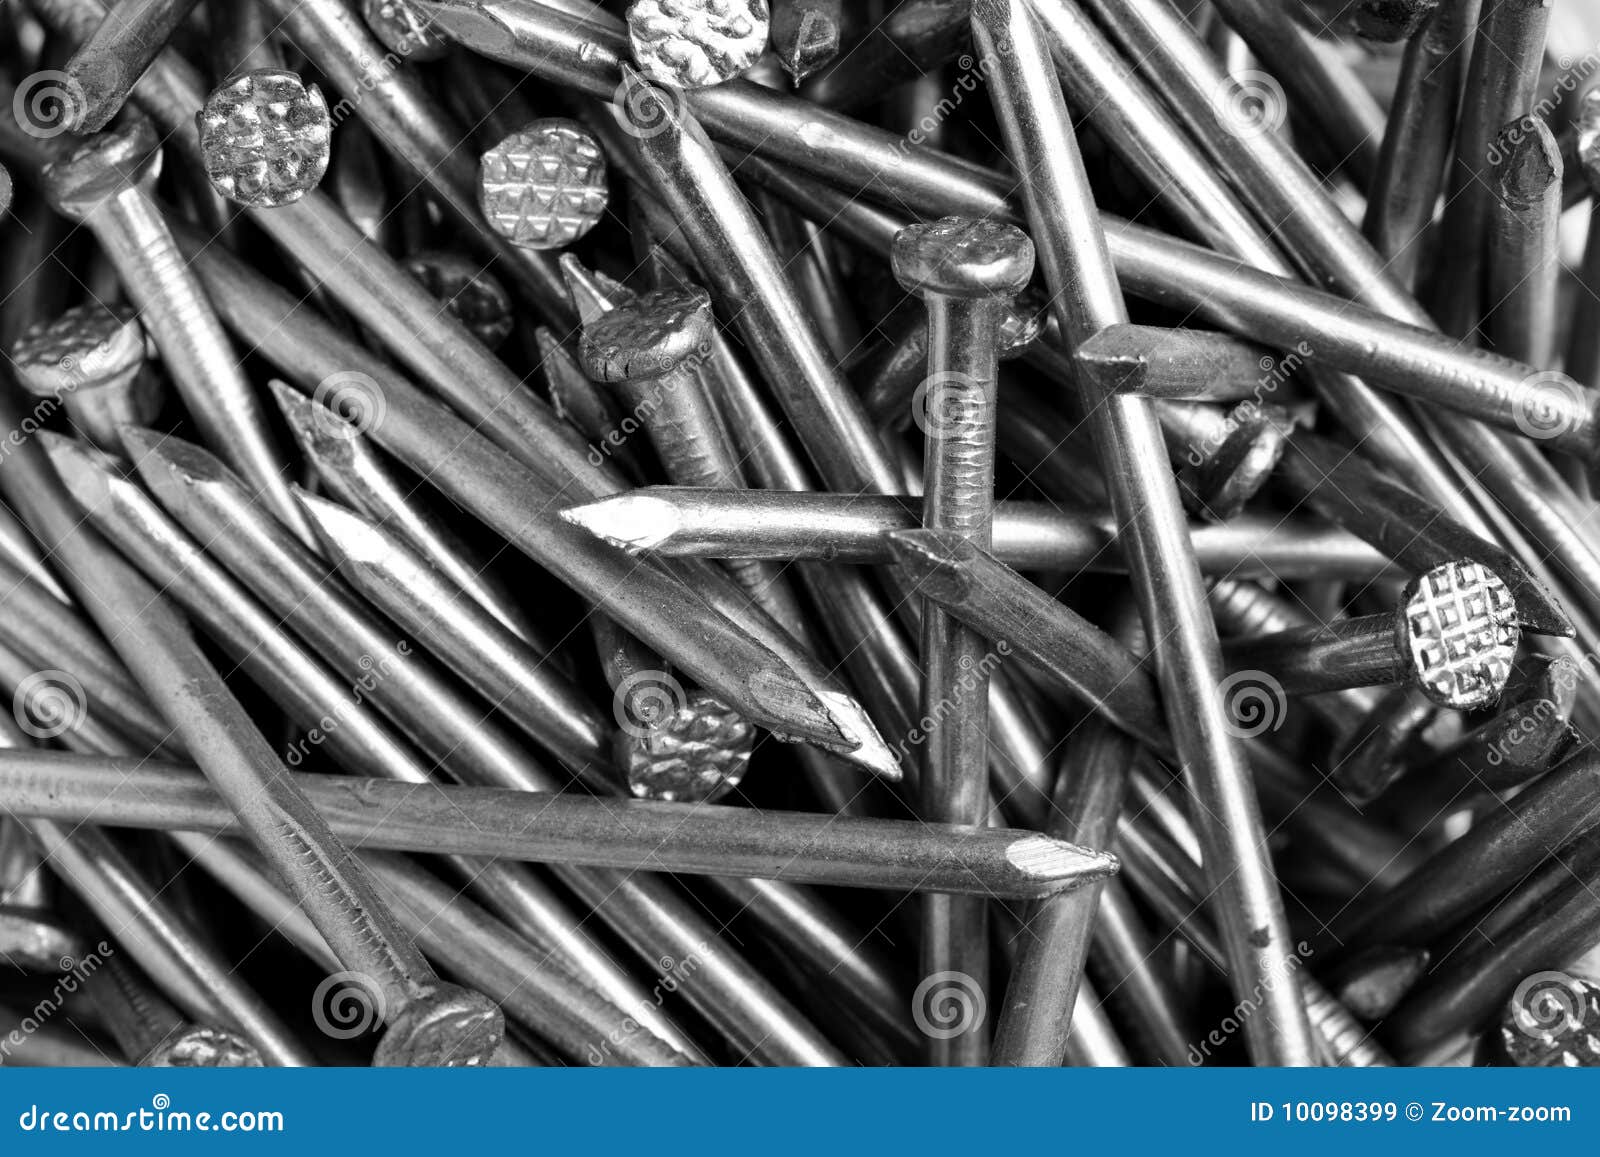 Nails stock image. Image of gray, metal, join, hard, material - 10098399